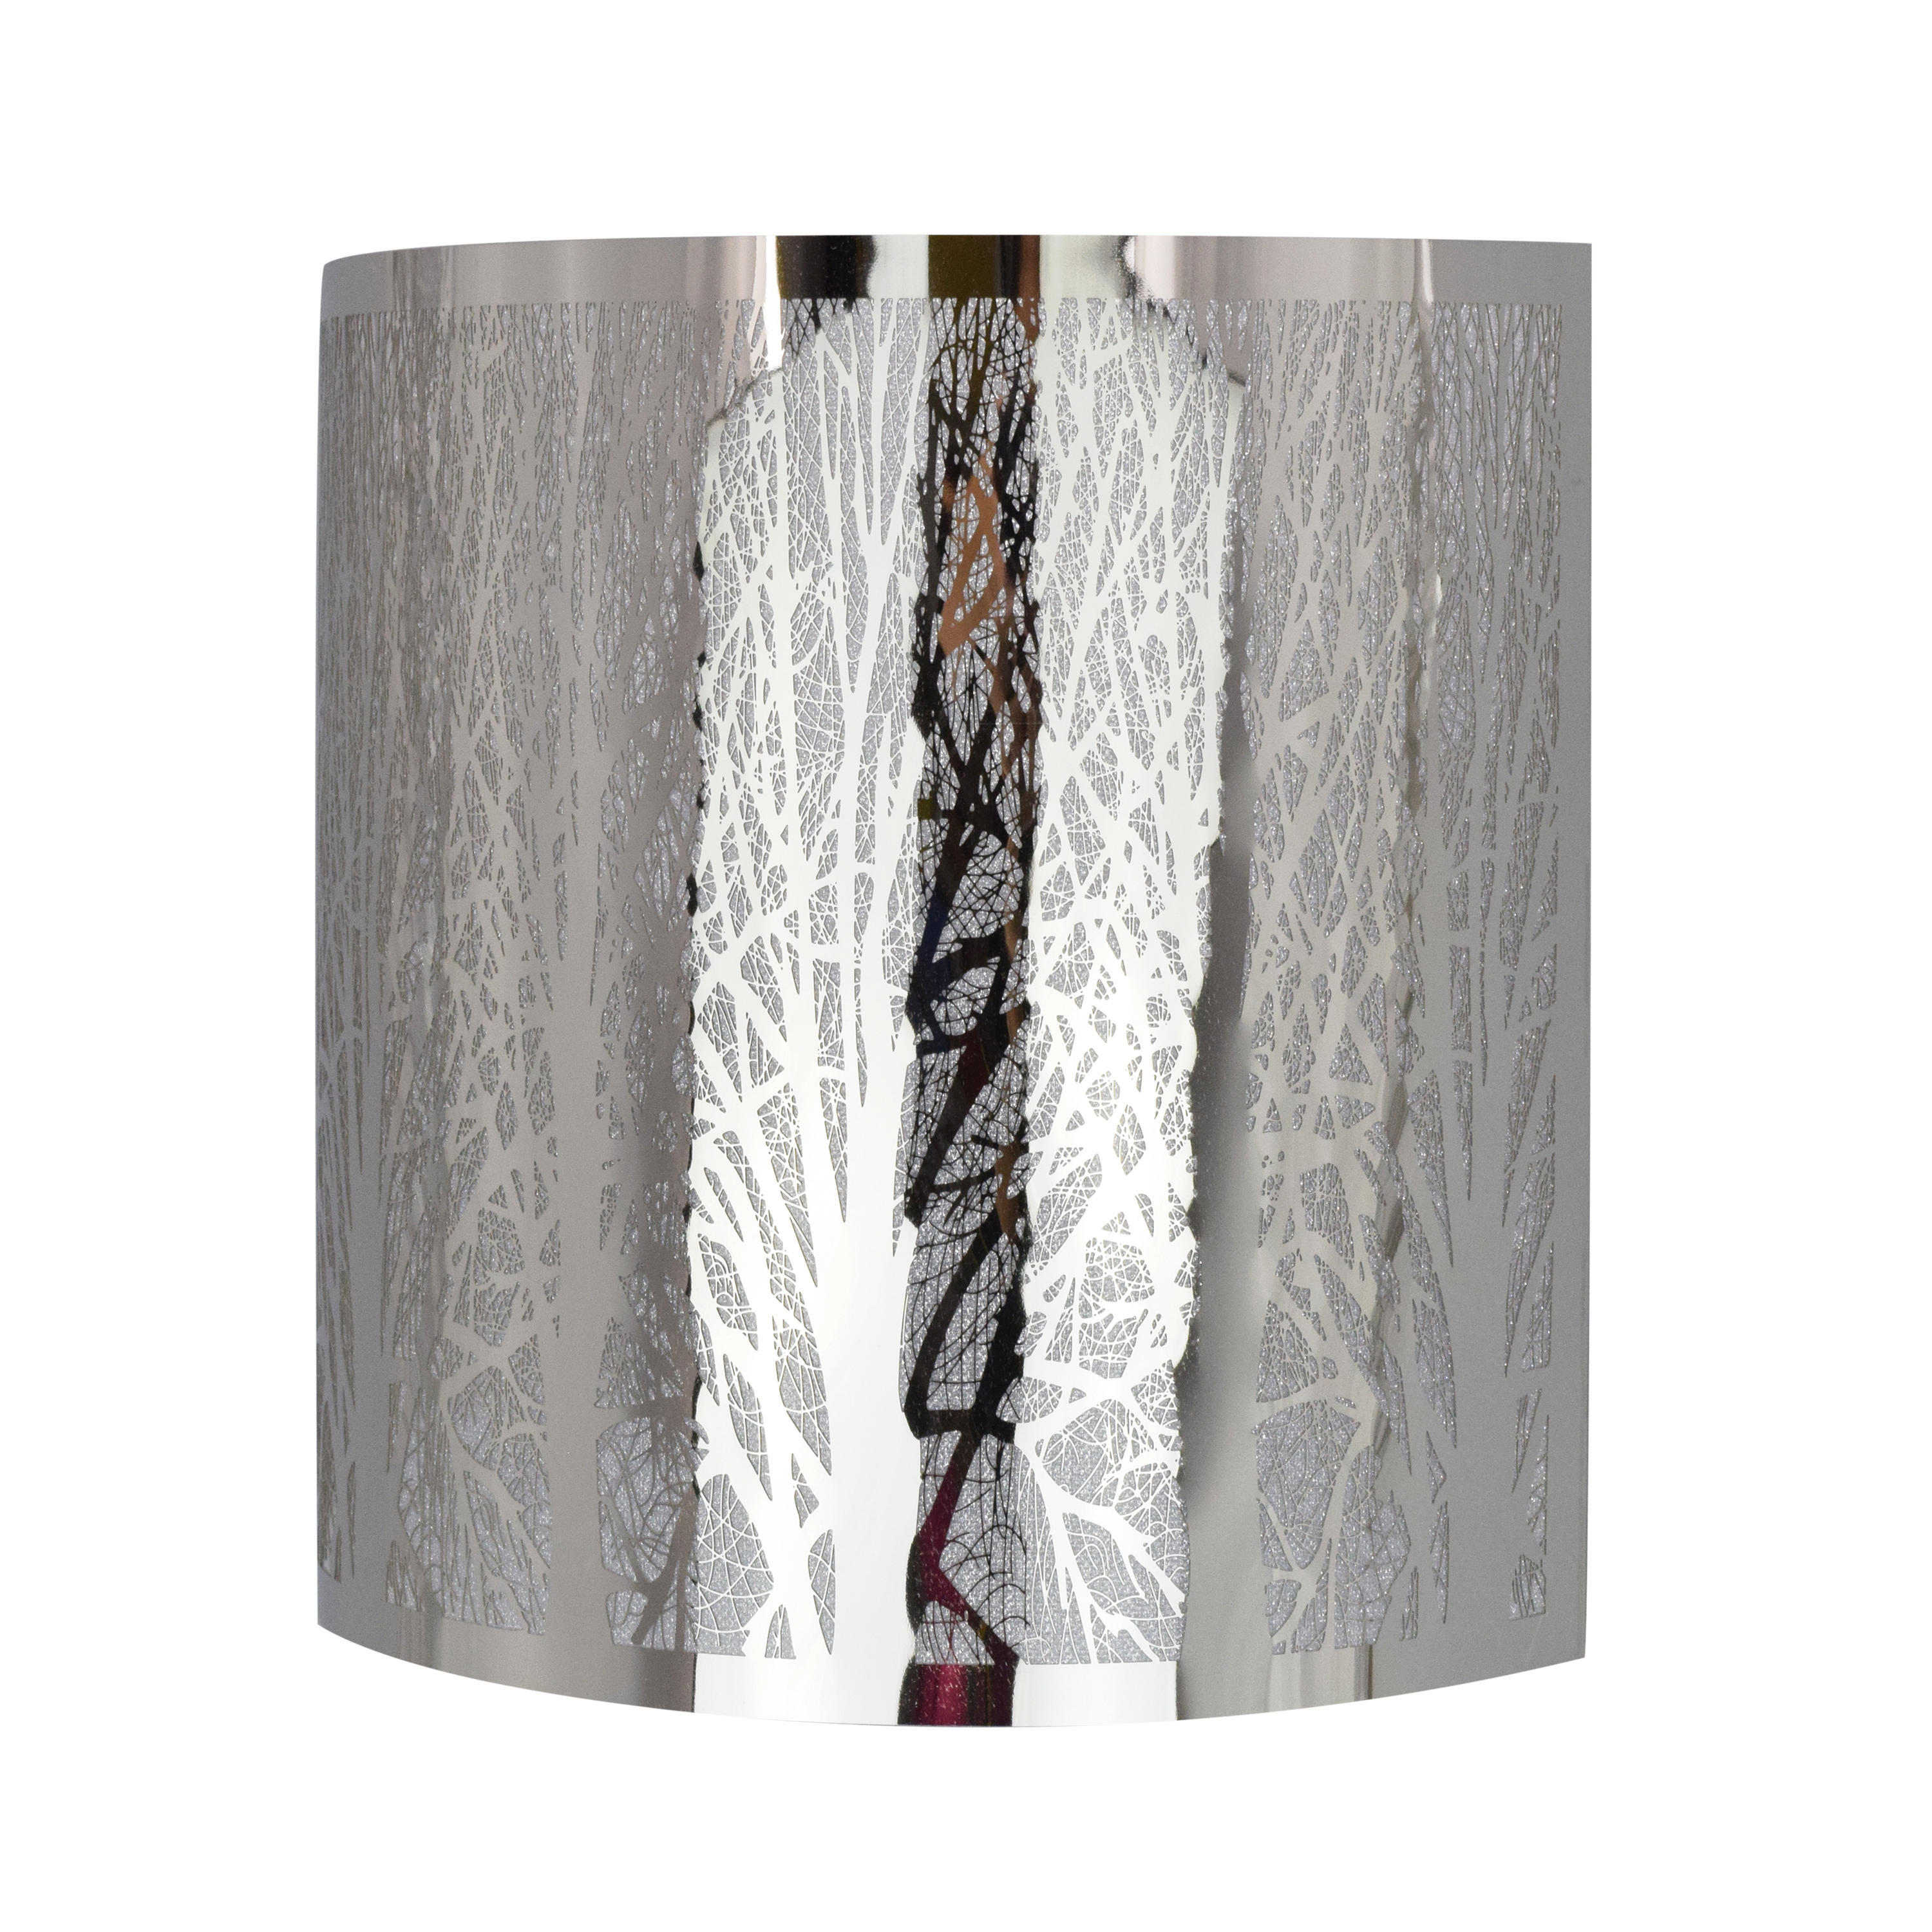 Applique Forest grigio / argento, in metallo, 23x23 cm, INSPIRE - 4